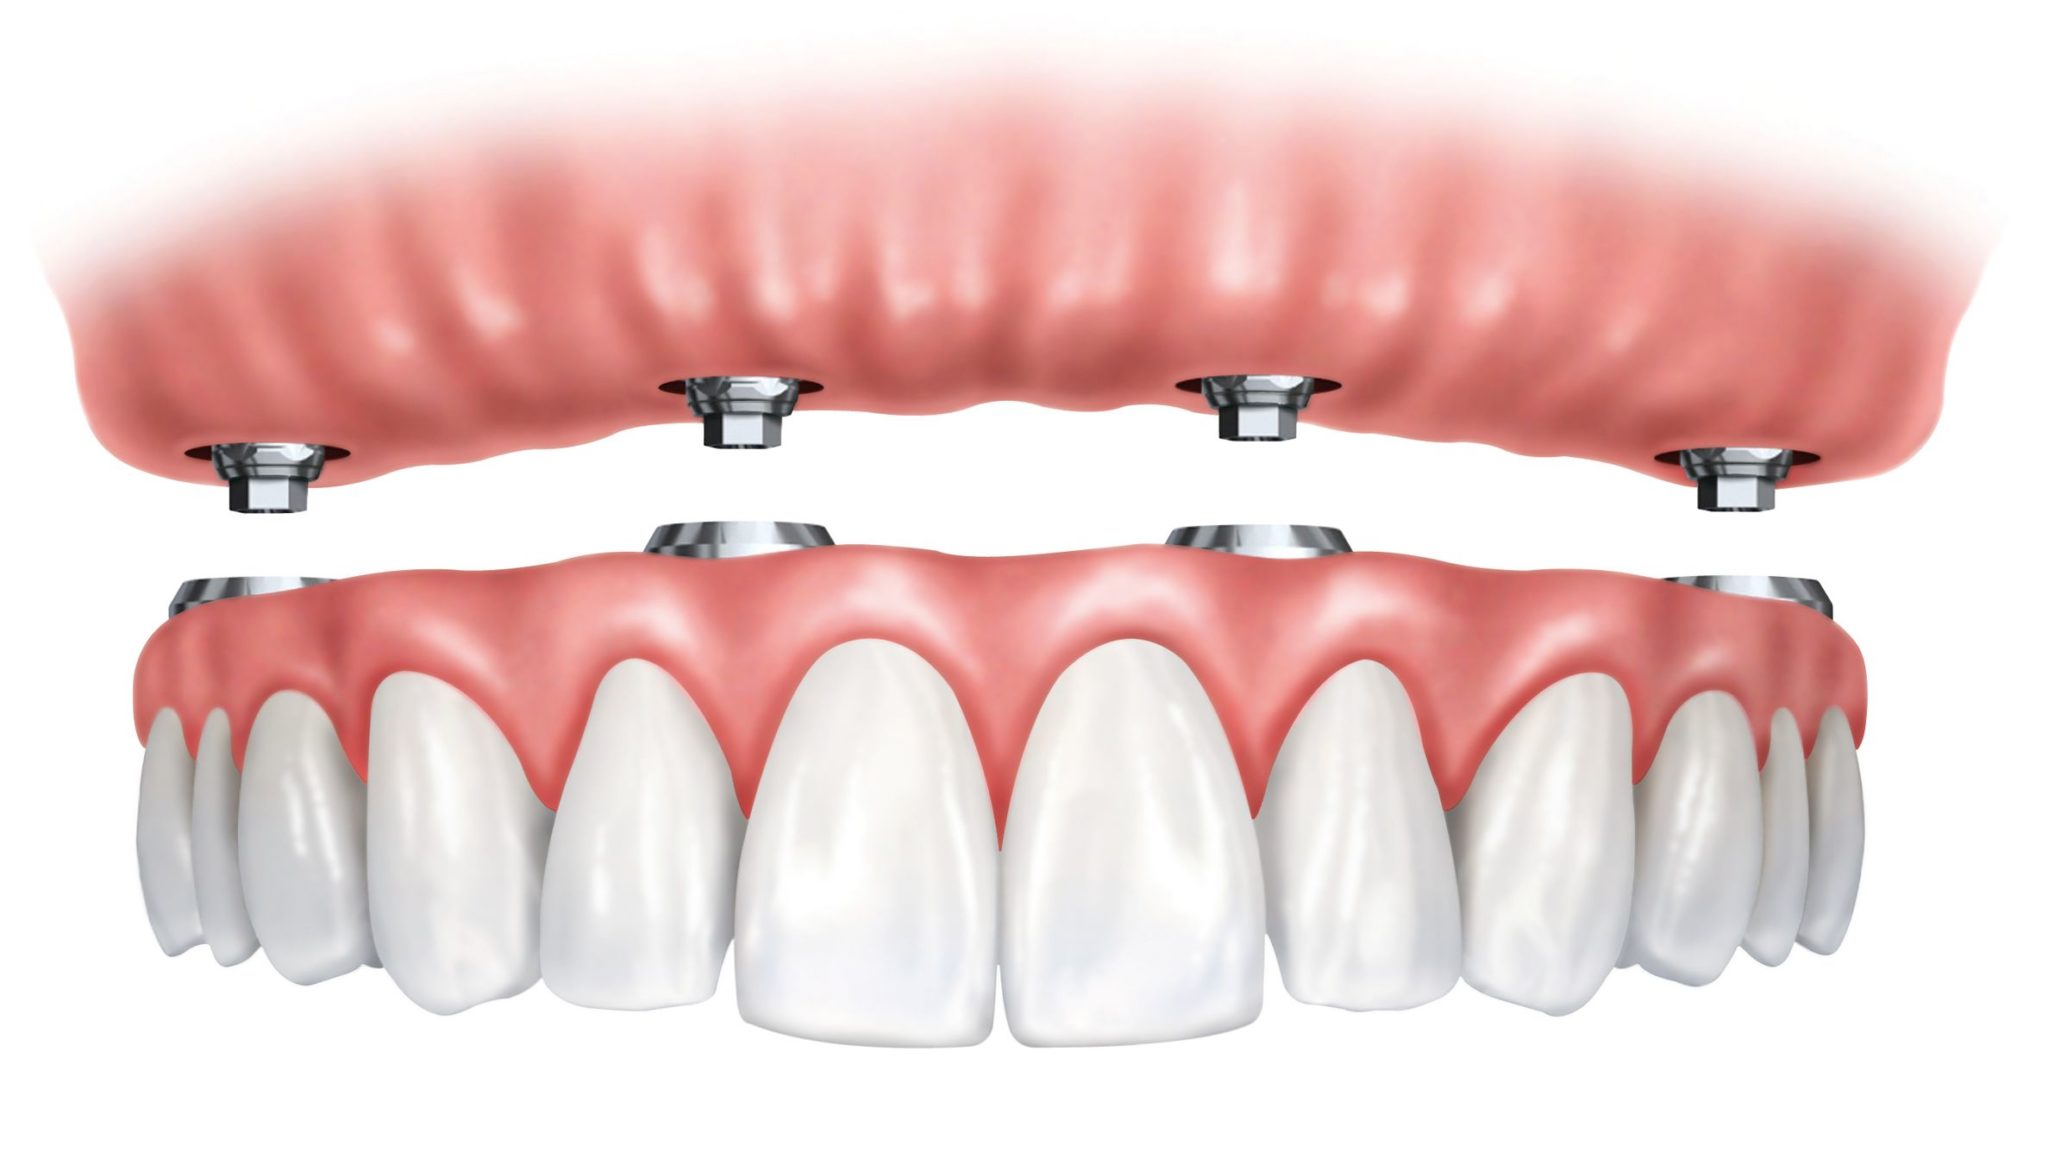 4 implants supporting 11-teeth upper denture